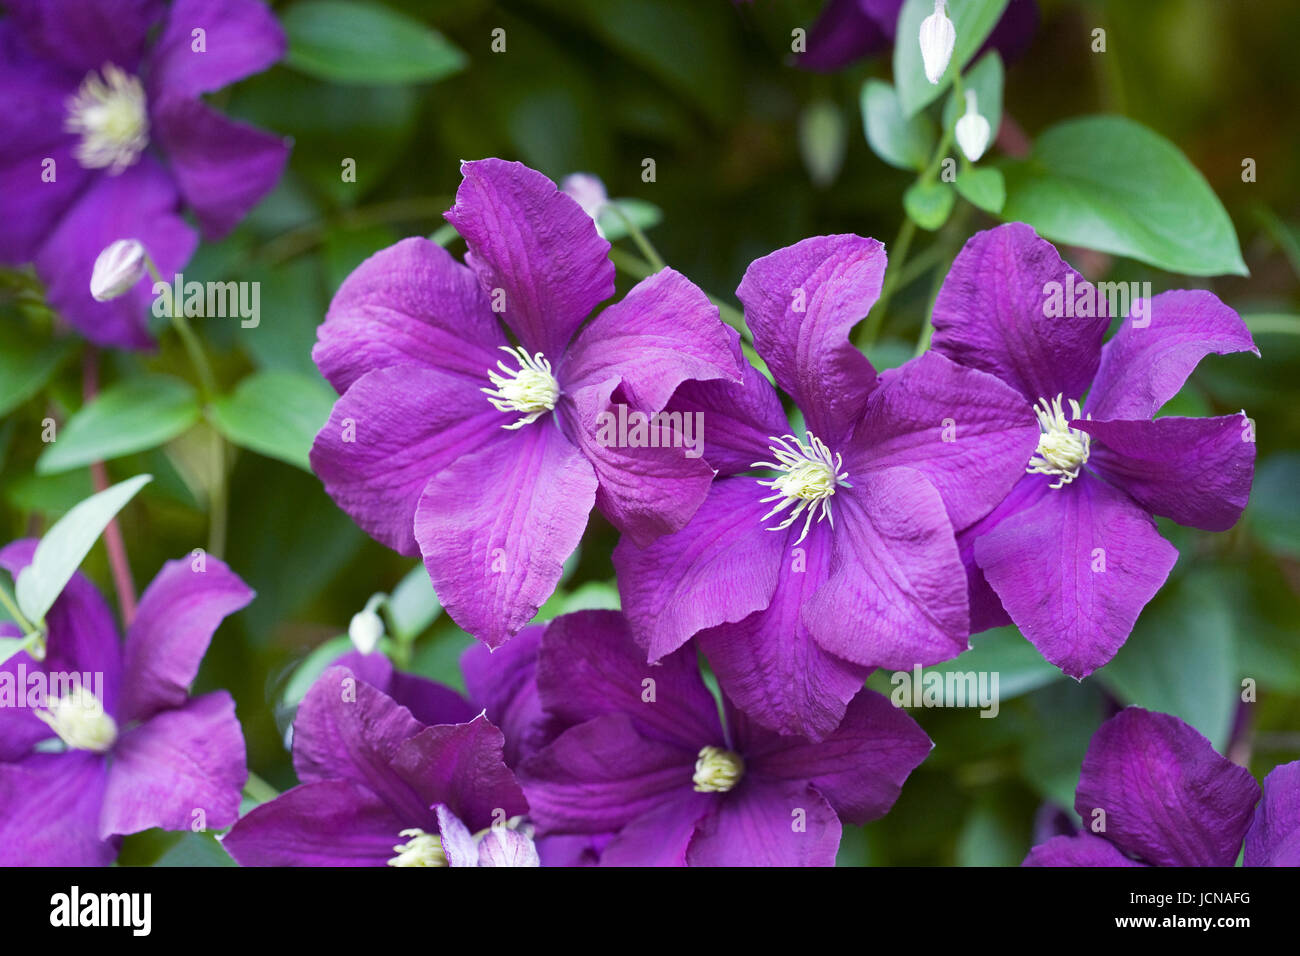 Clematis viticella 'Etoile Violette' flowers. Stock Photo